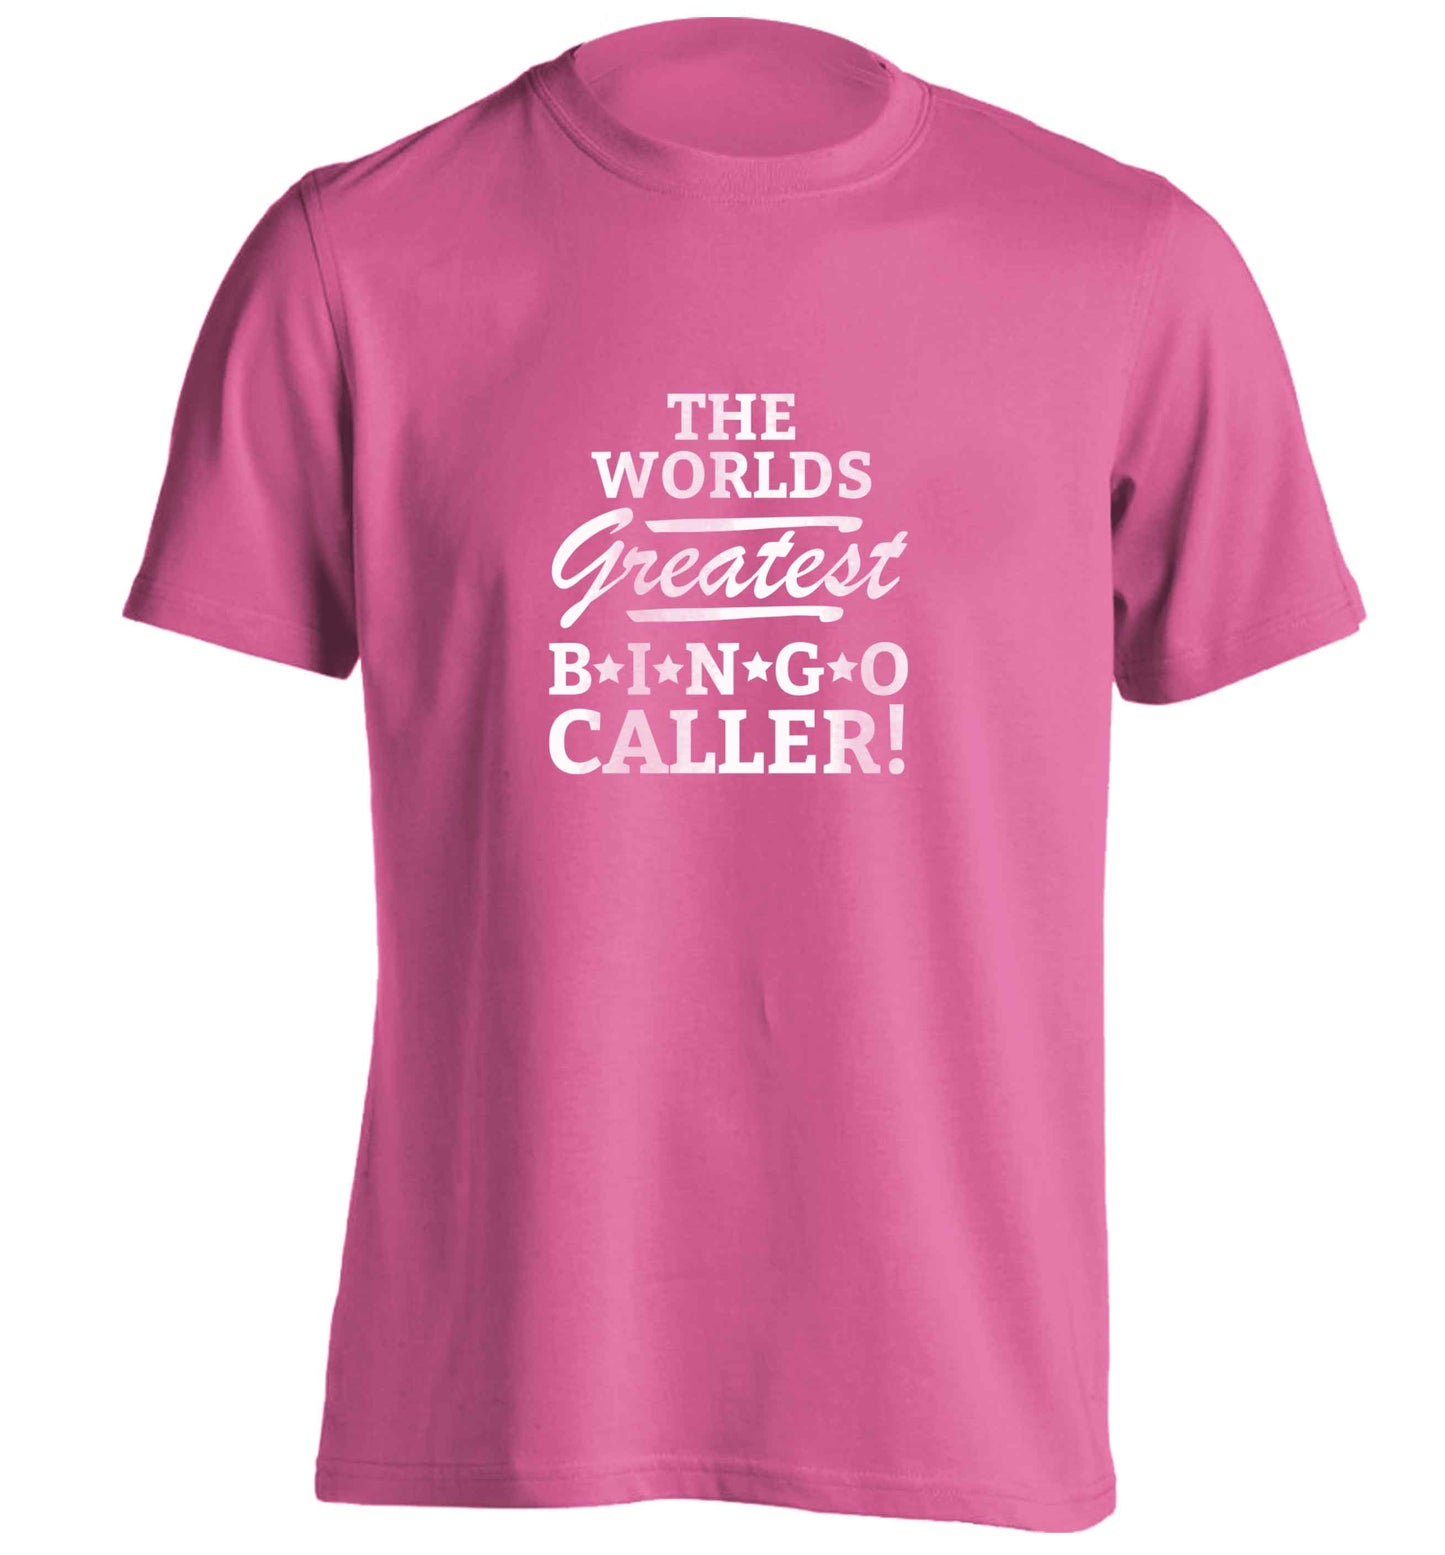 Worlds greatest bingo caller adults unisex pink Tshirt 2XL